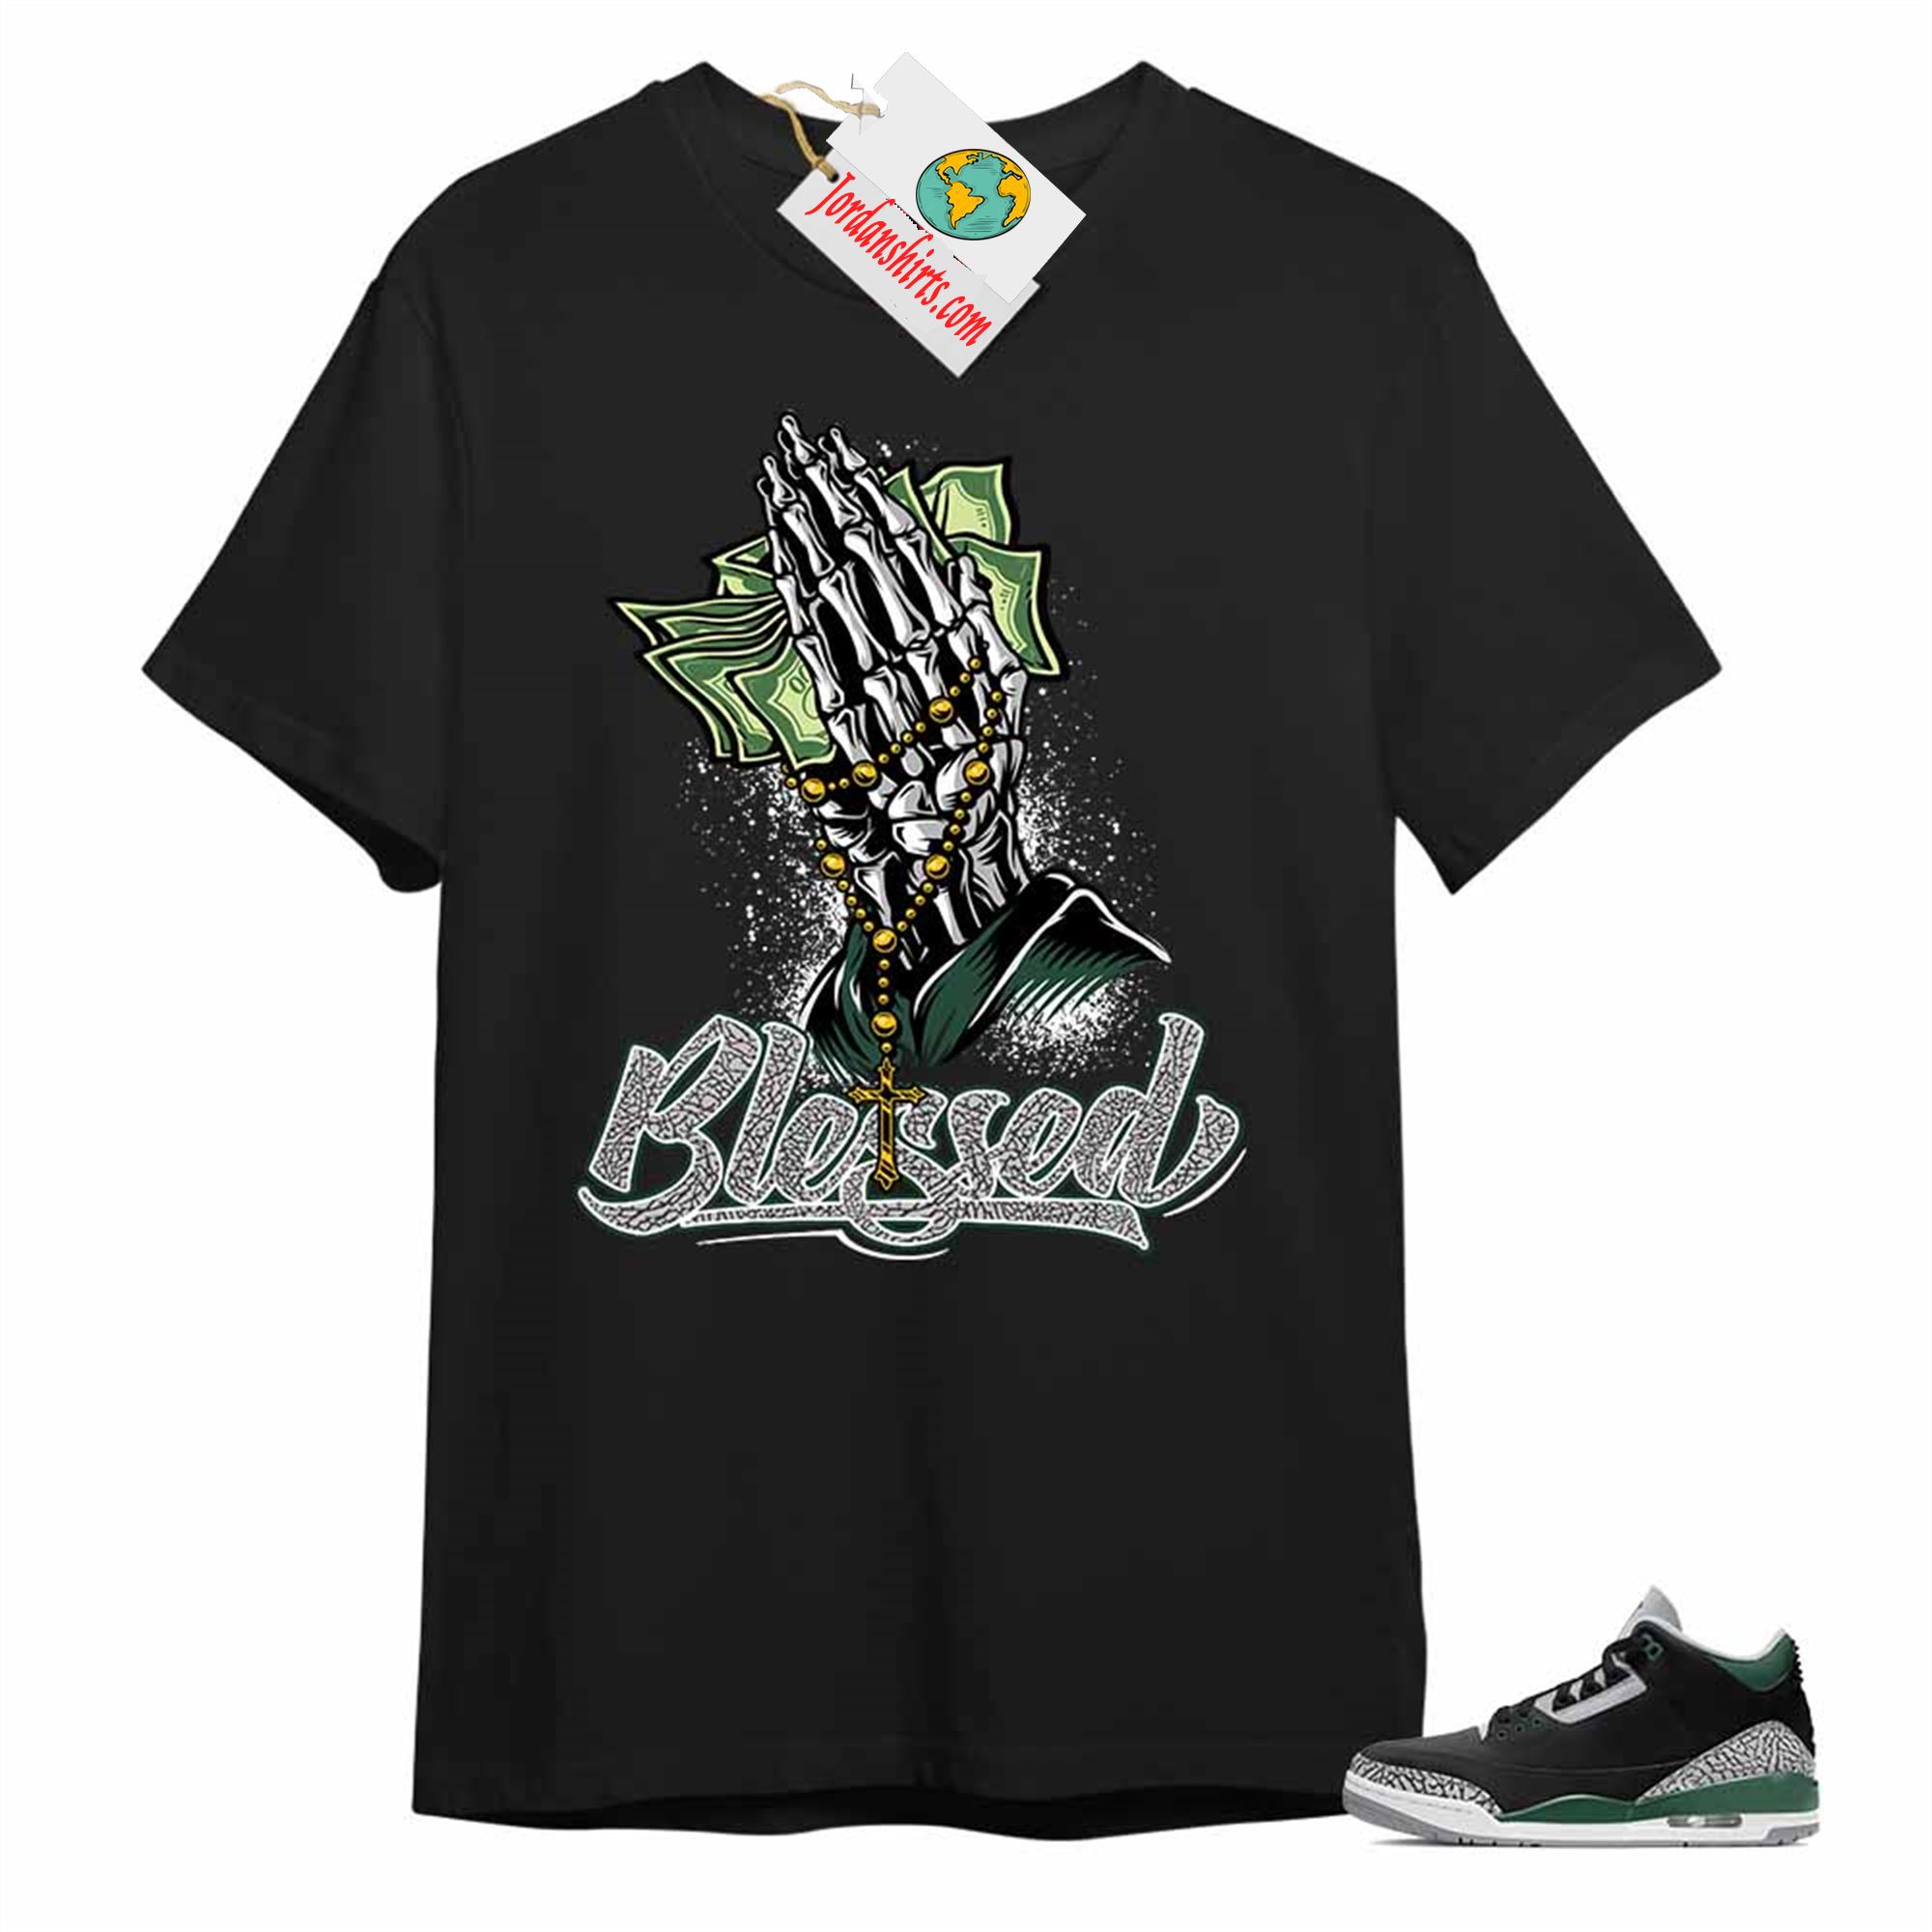 Jordan 3 Shirt, Blessed Pray Hand Money Black T-shirt Air Jordan 3 Pine Green 3s Size Up To 5xl